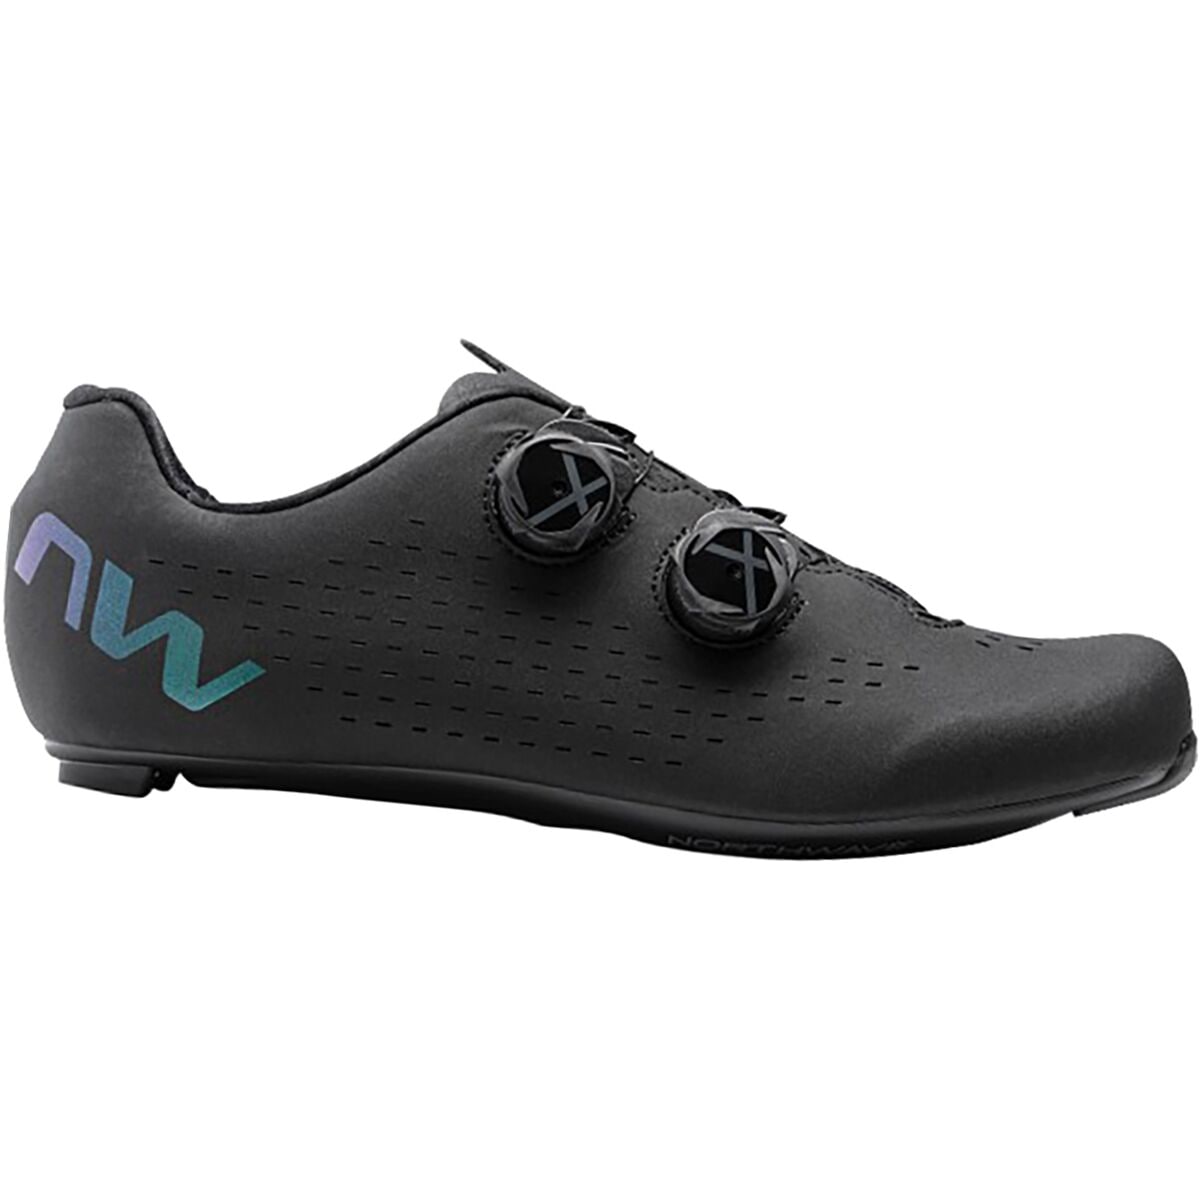 Northwave Revolution 3 Cycling Shoe - Men's Black/Iridescent, 44.0